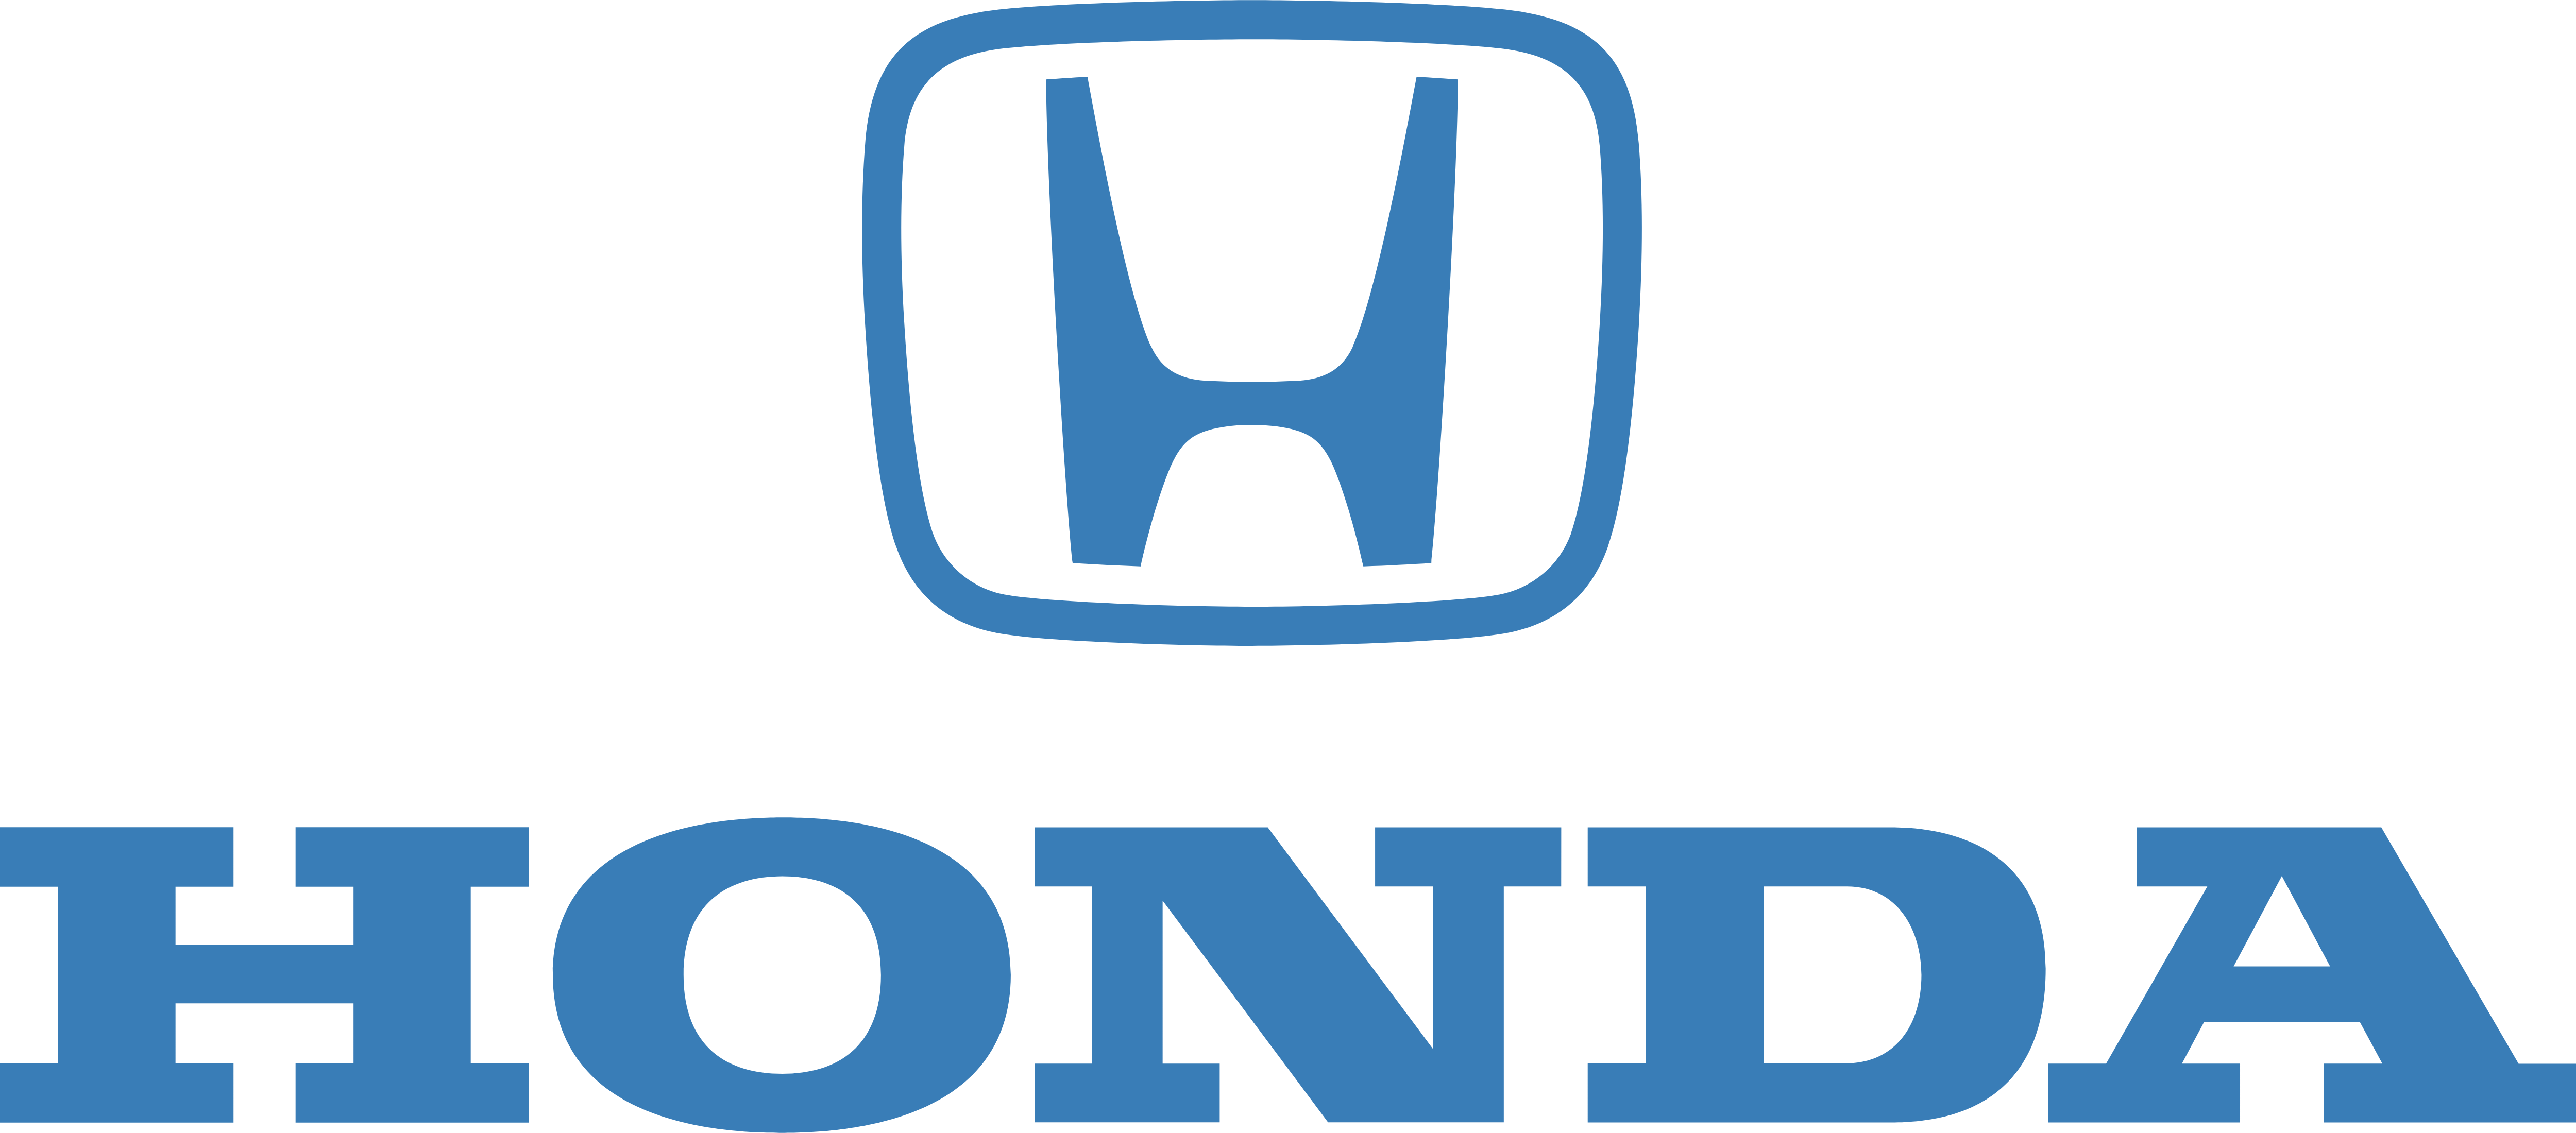 blue honda logos download #32841